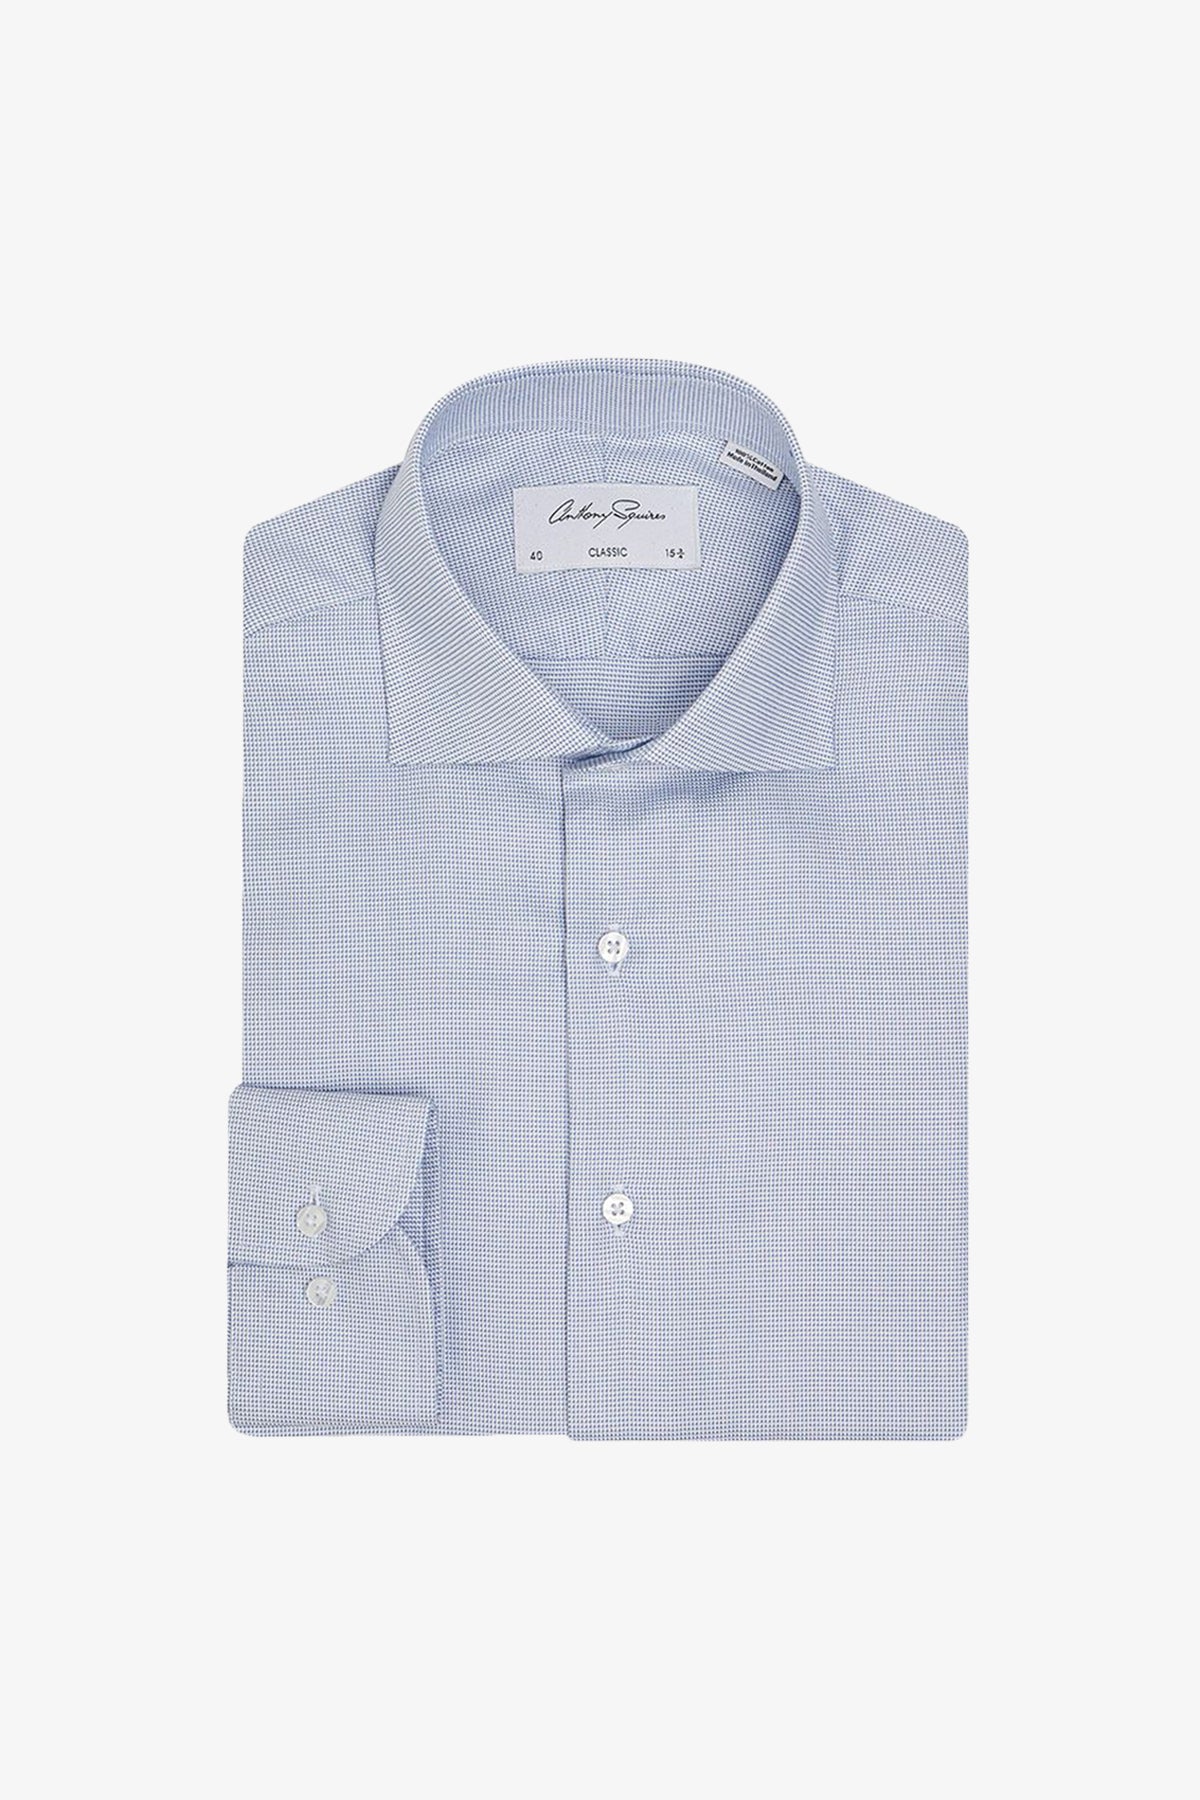 Miles - Blue Business shirt